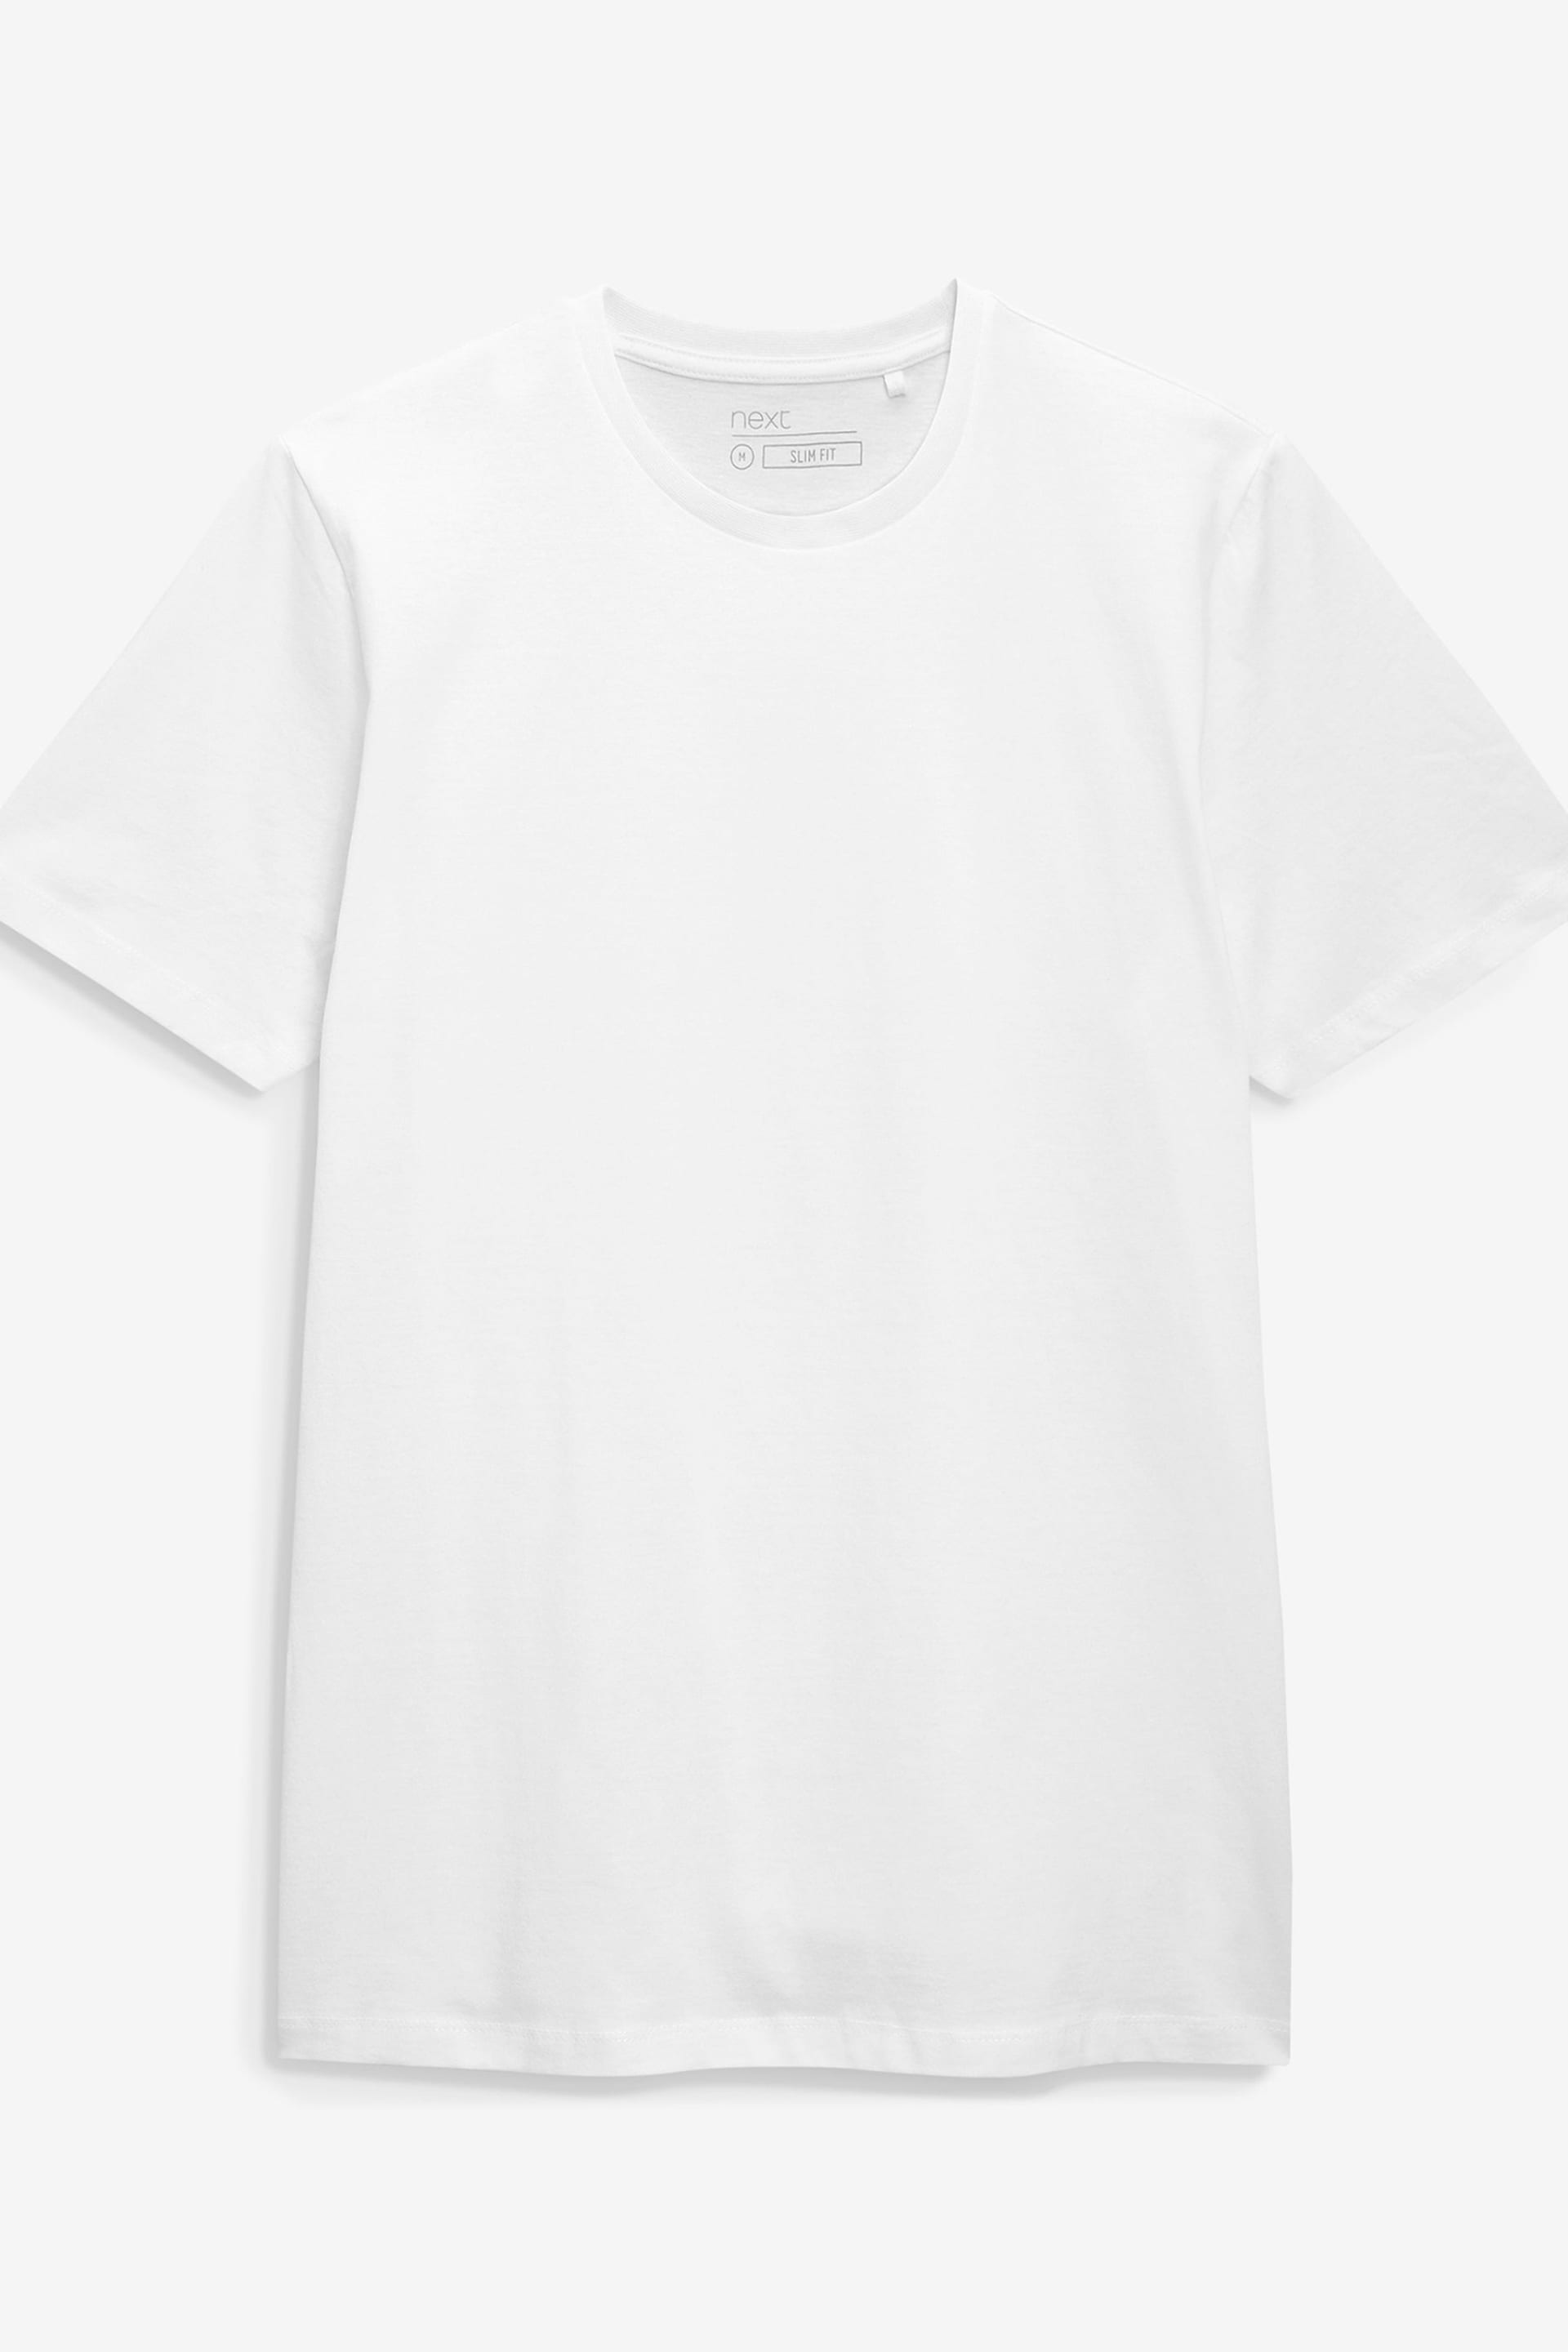 White Slim Fit Essential Crew Neck T-Shirt - Image 4 of 4